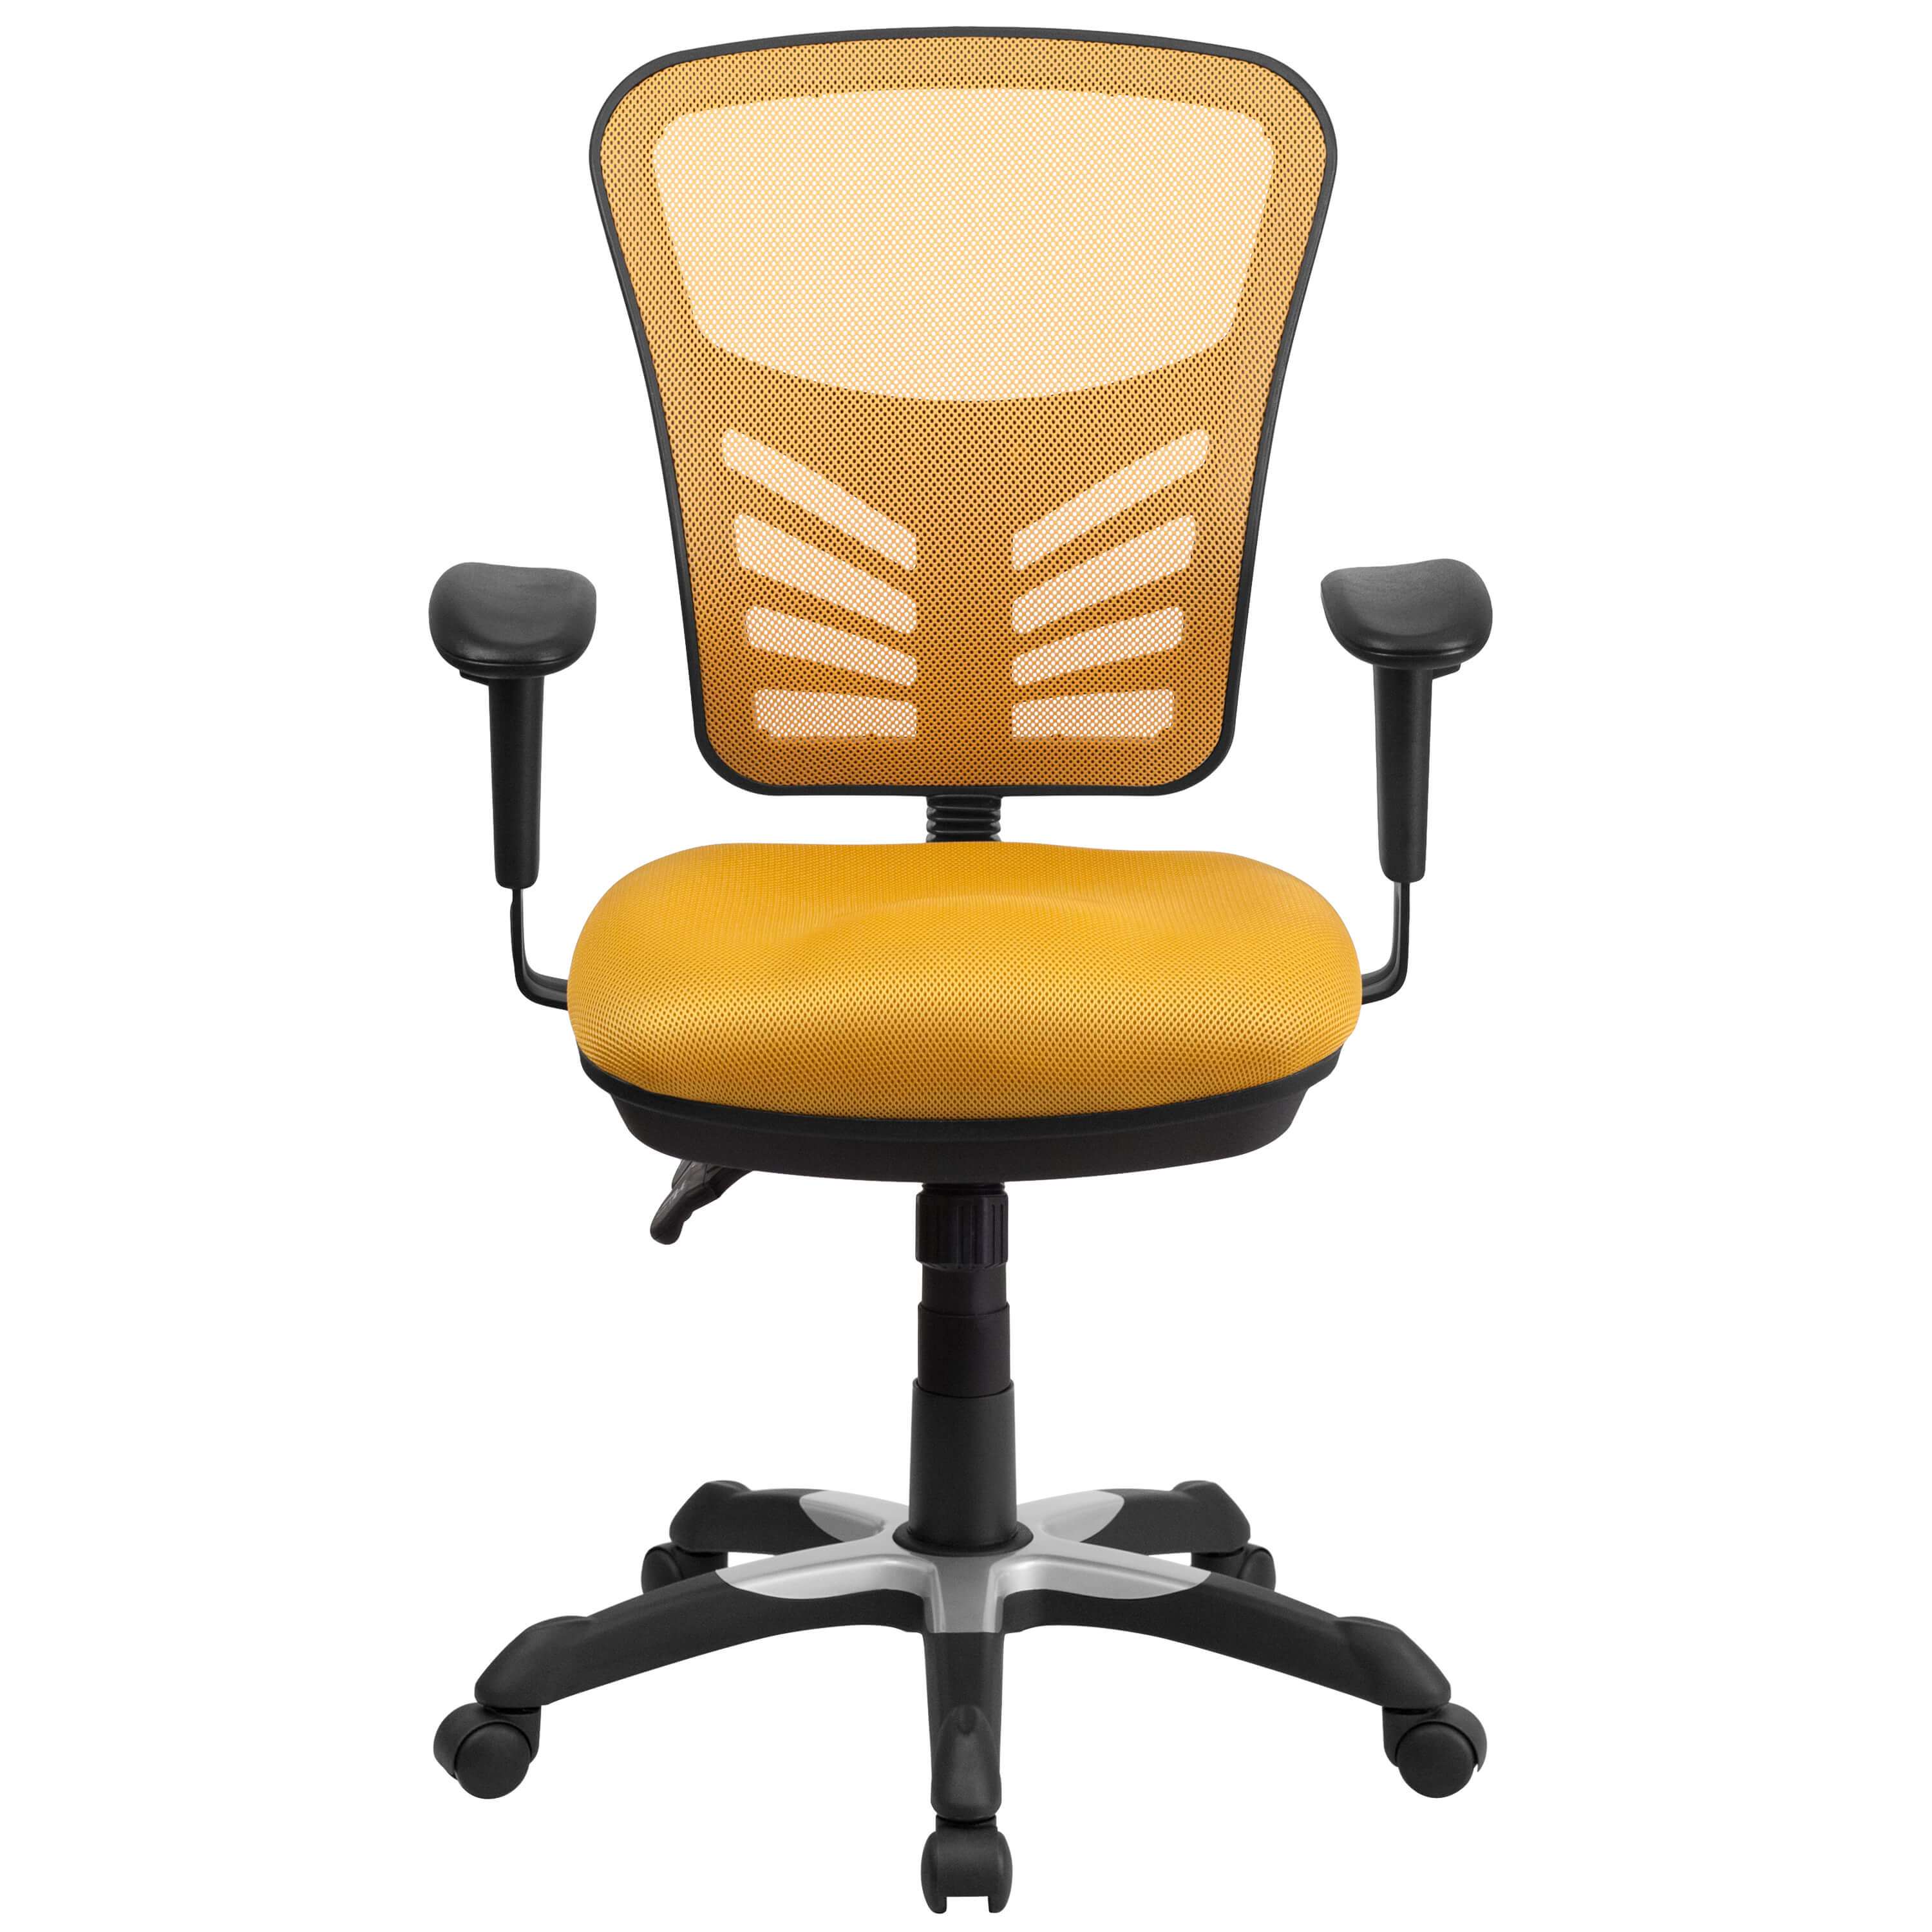 Colorful desk chairs CUB HL 0001 YEL GG FLA